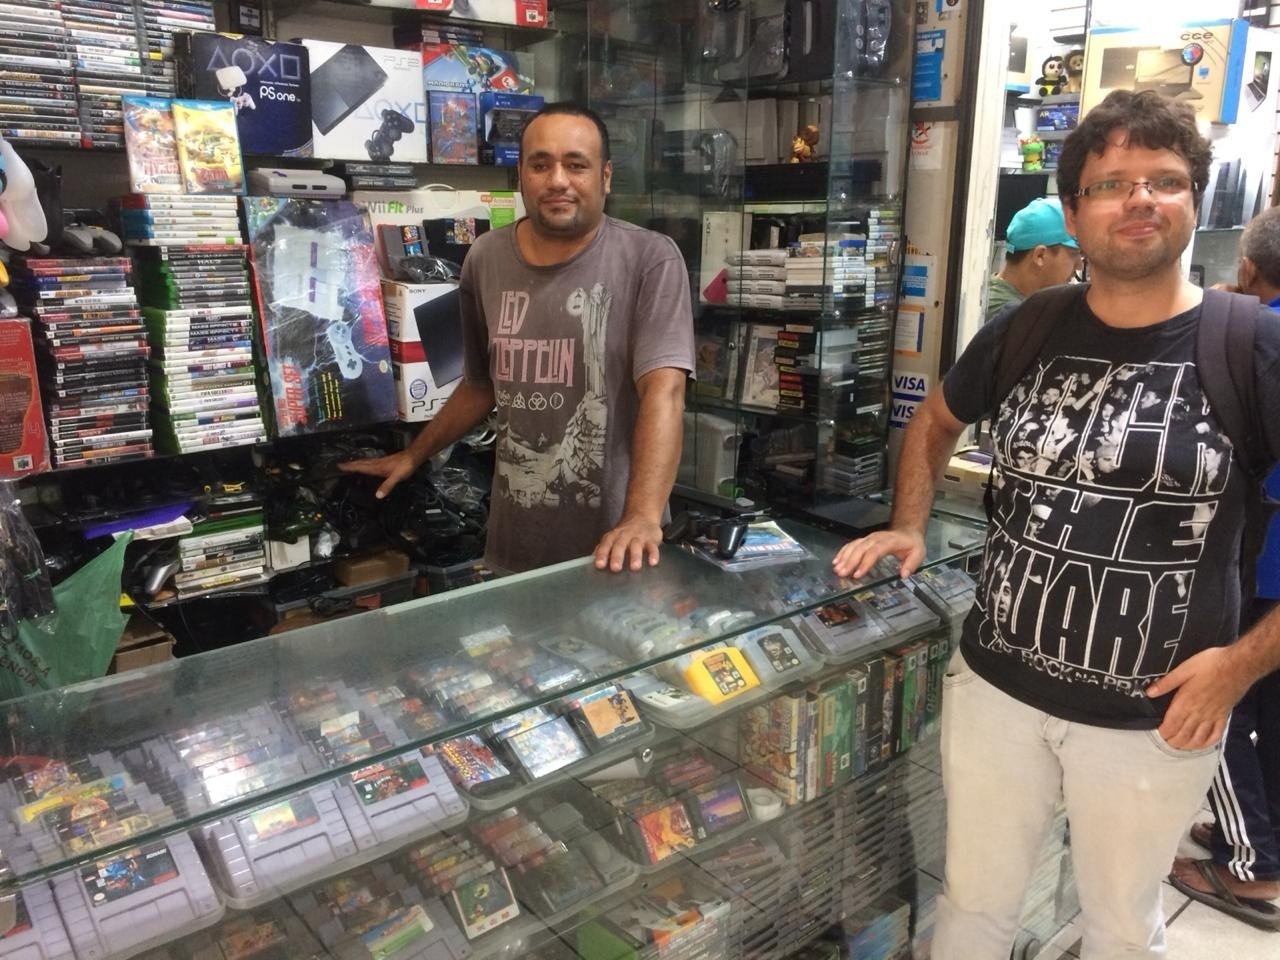 Loja famosa de games fecha as portas após 7 anos e dono vira confeiteiro -  Games - Campo Grande News